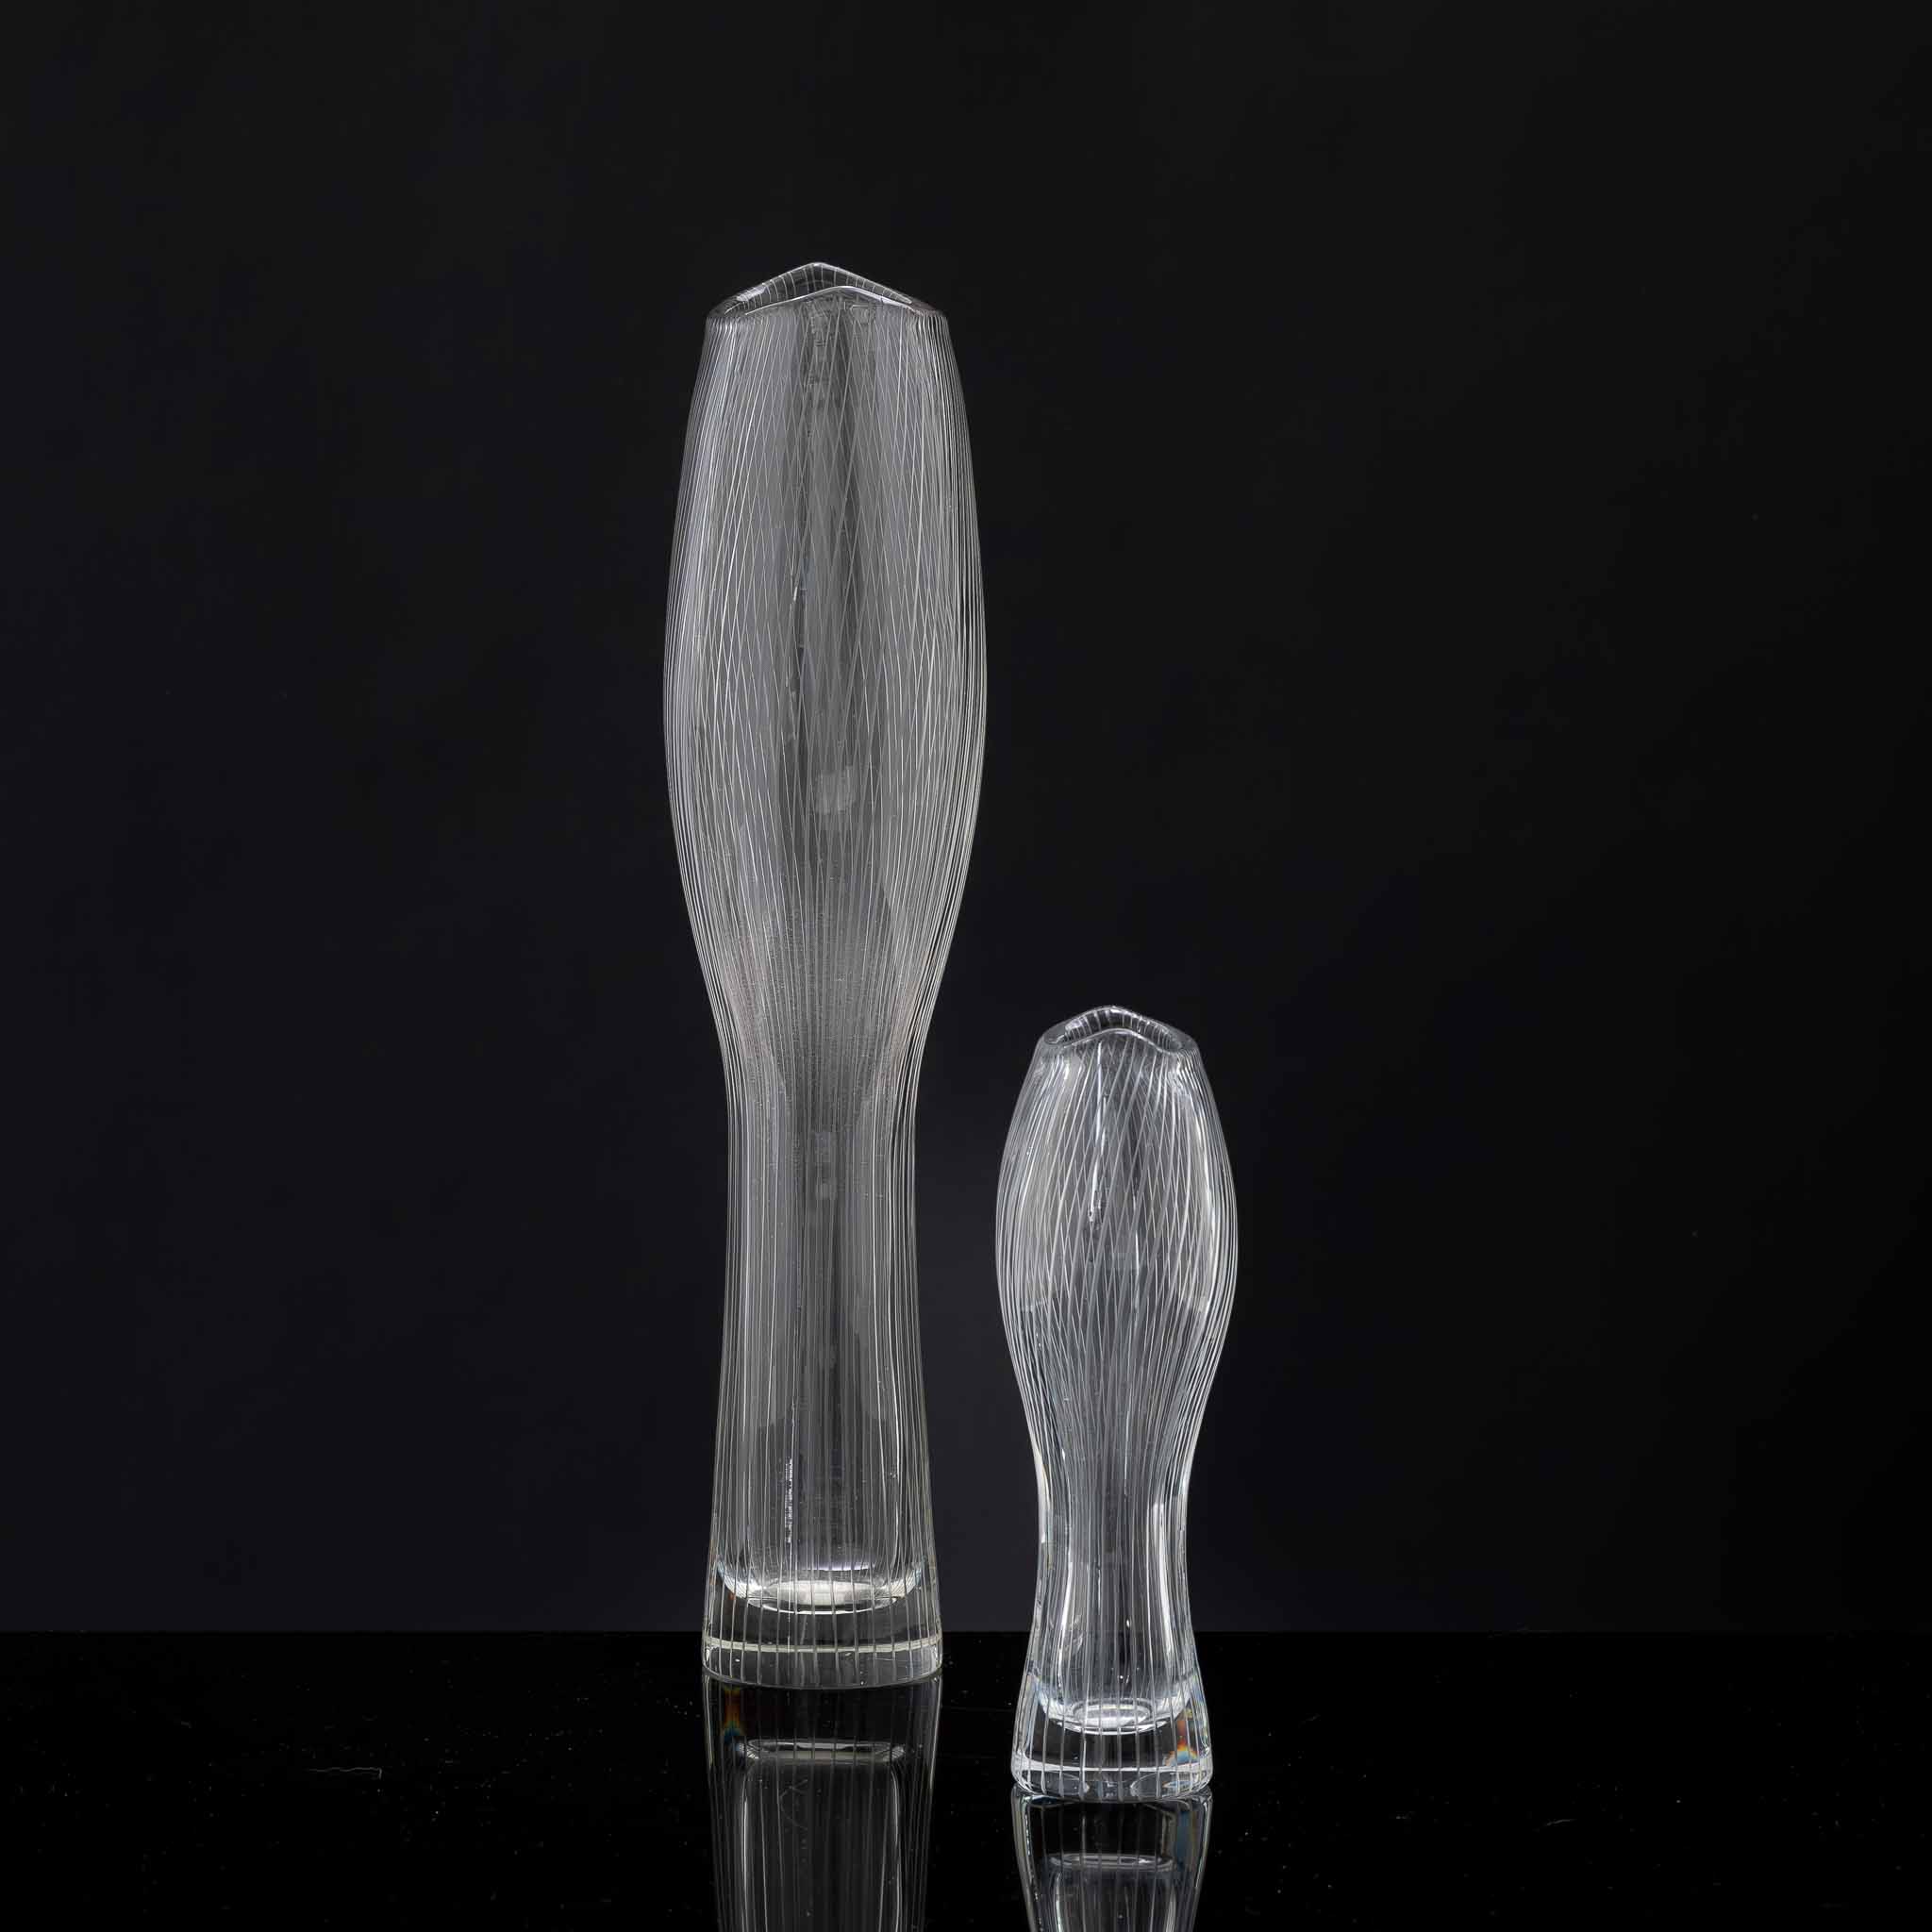 Tapio Wirkkala - A set of both sizes crystal art-object, model 3545 - Iittala Finland 1957 & 1958